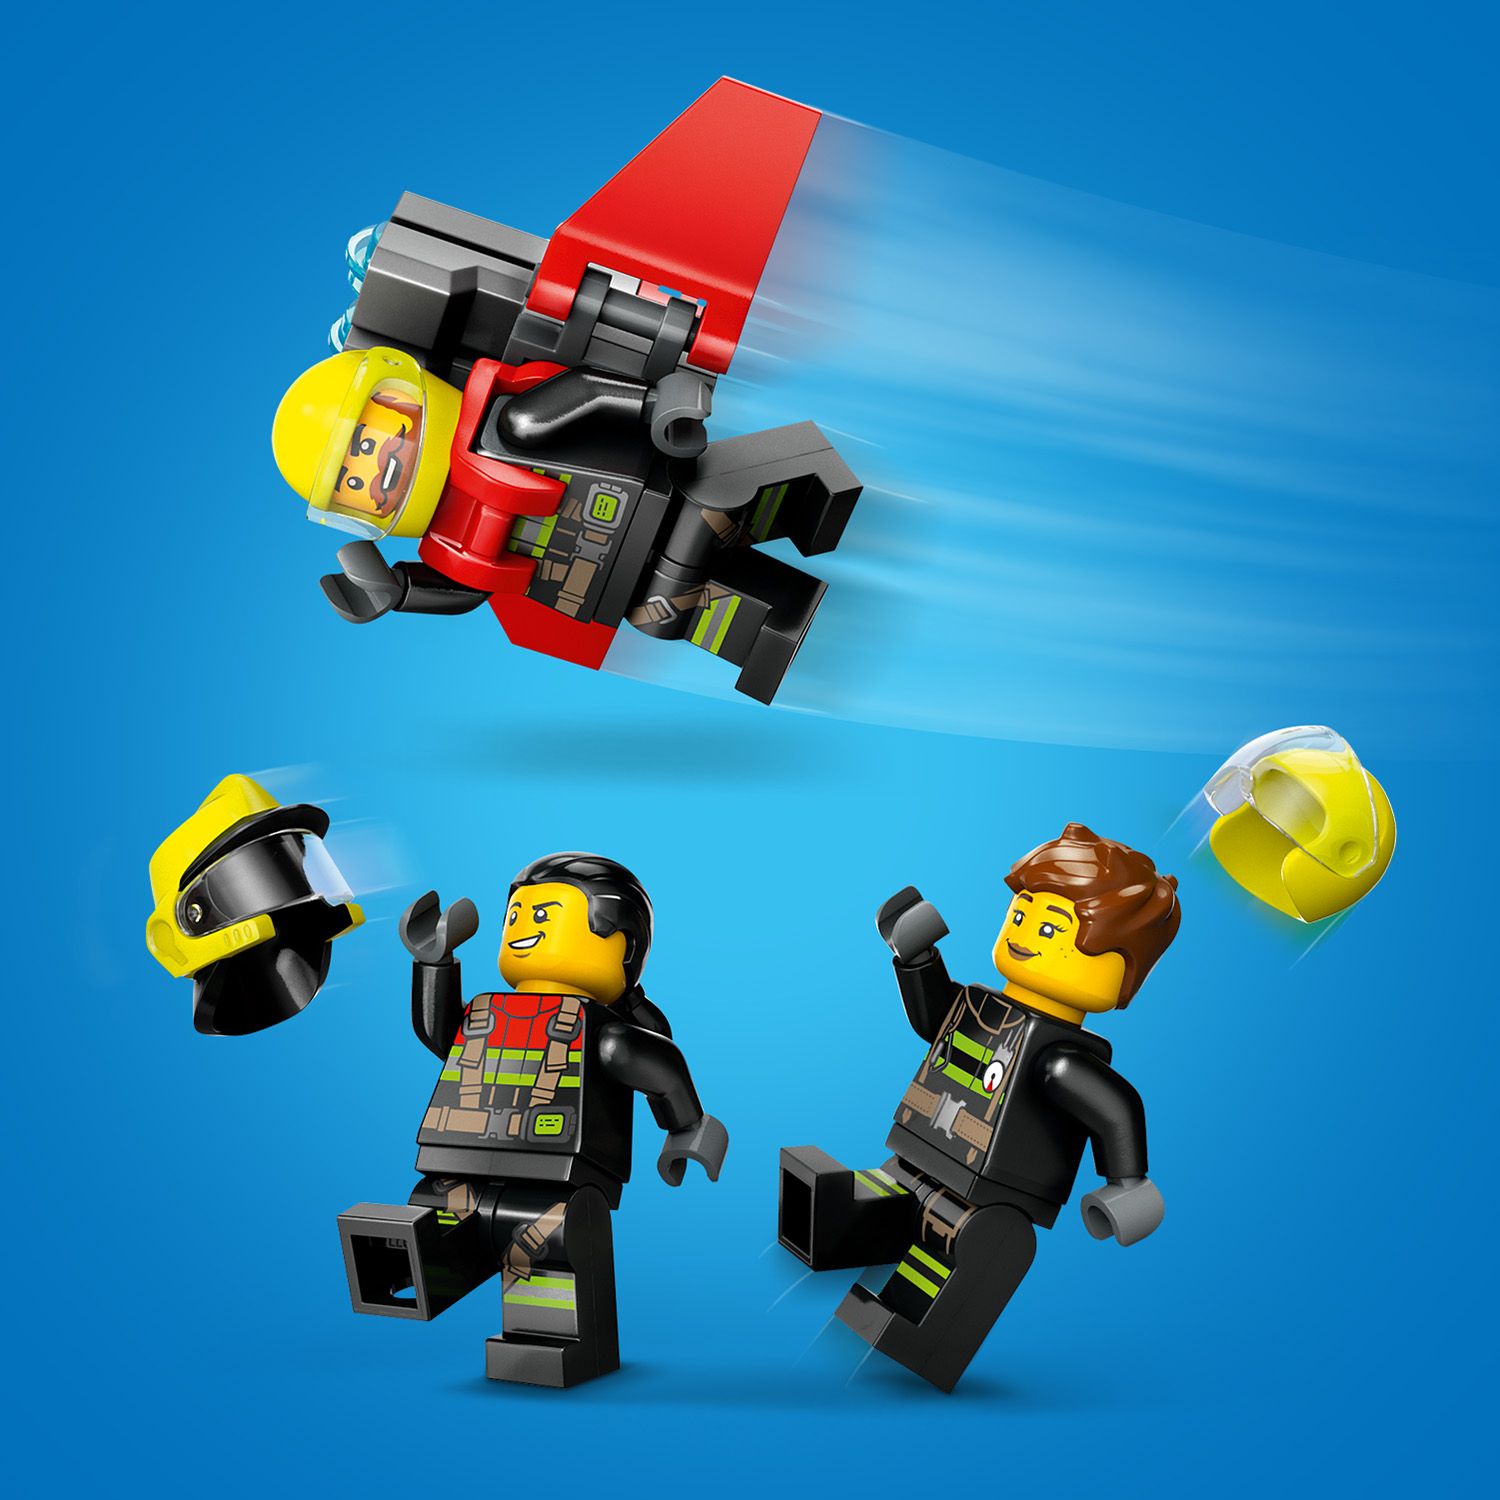 3 firefighter minifigures